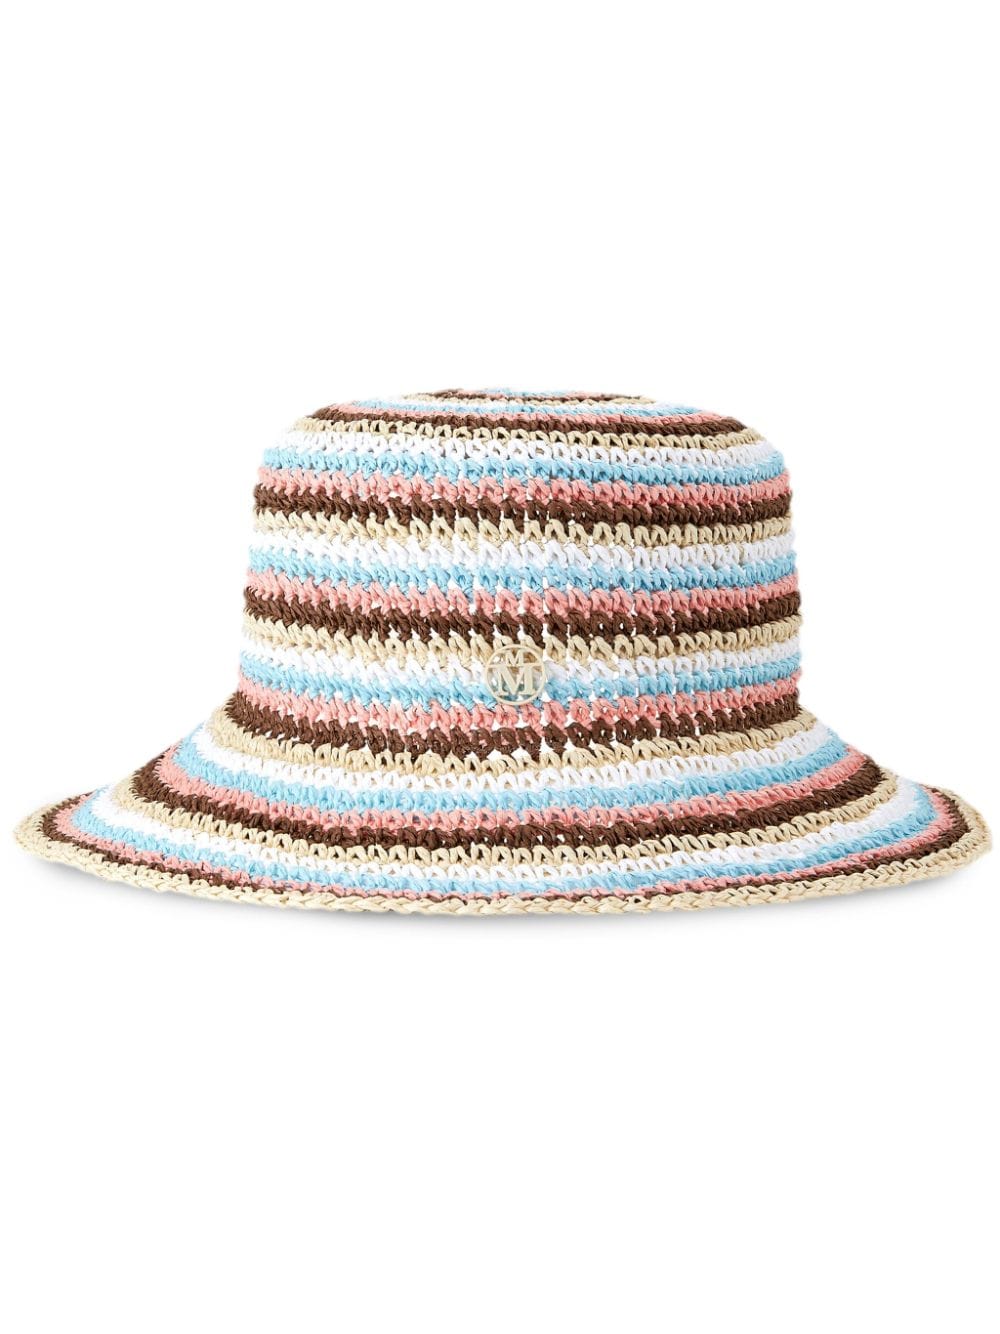 New Kendall straw bucket hat